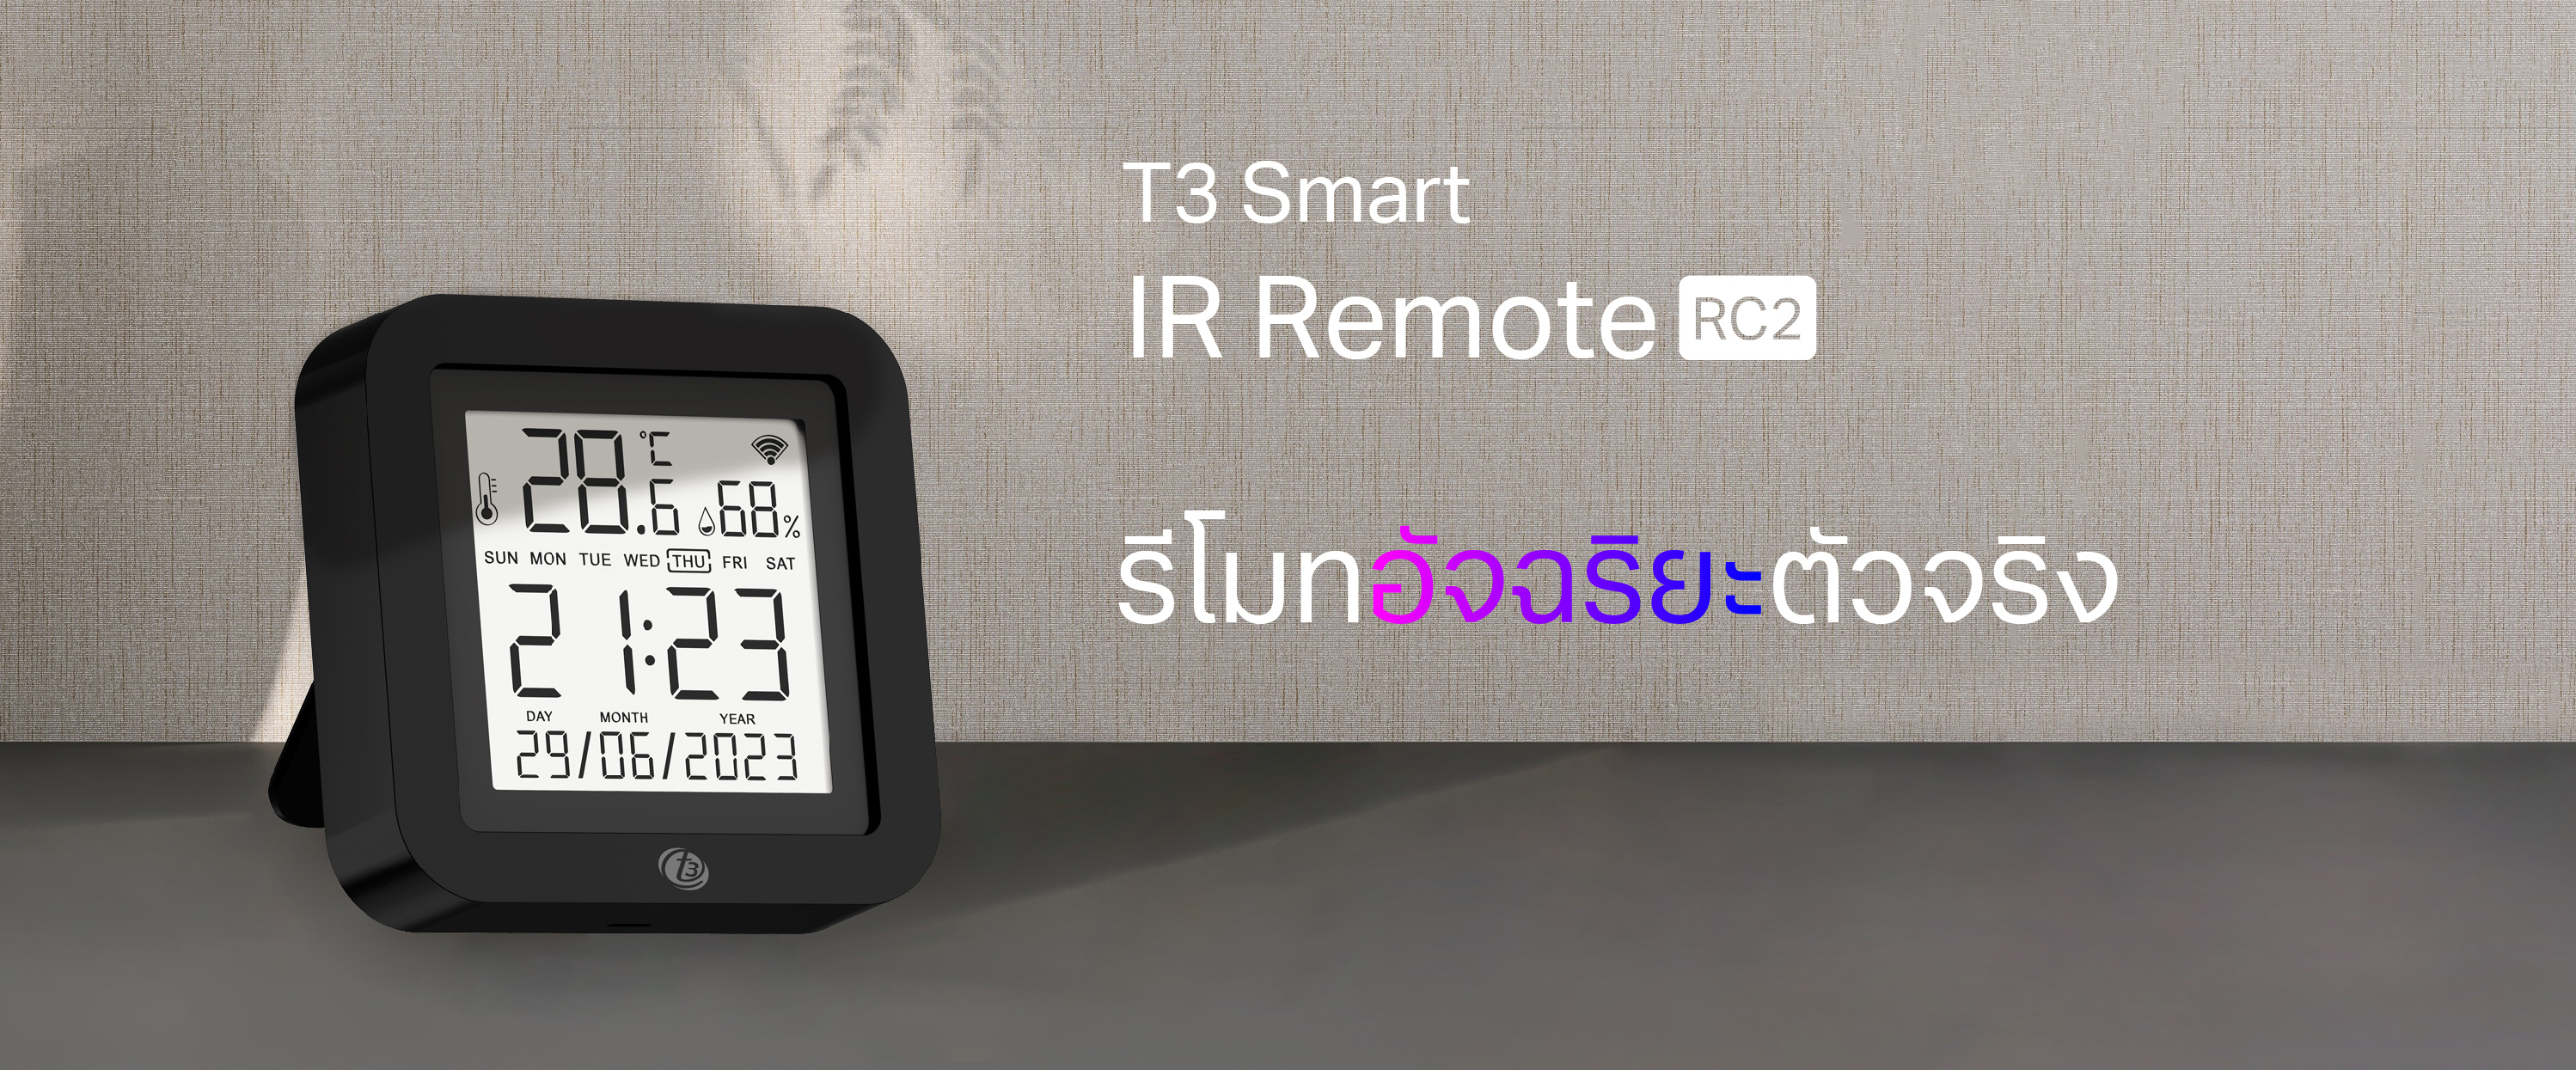 T3 Smart IR Remote RC2